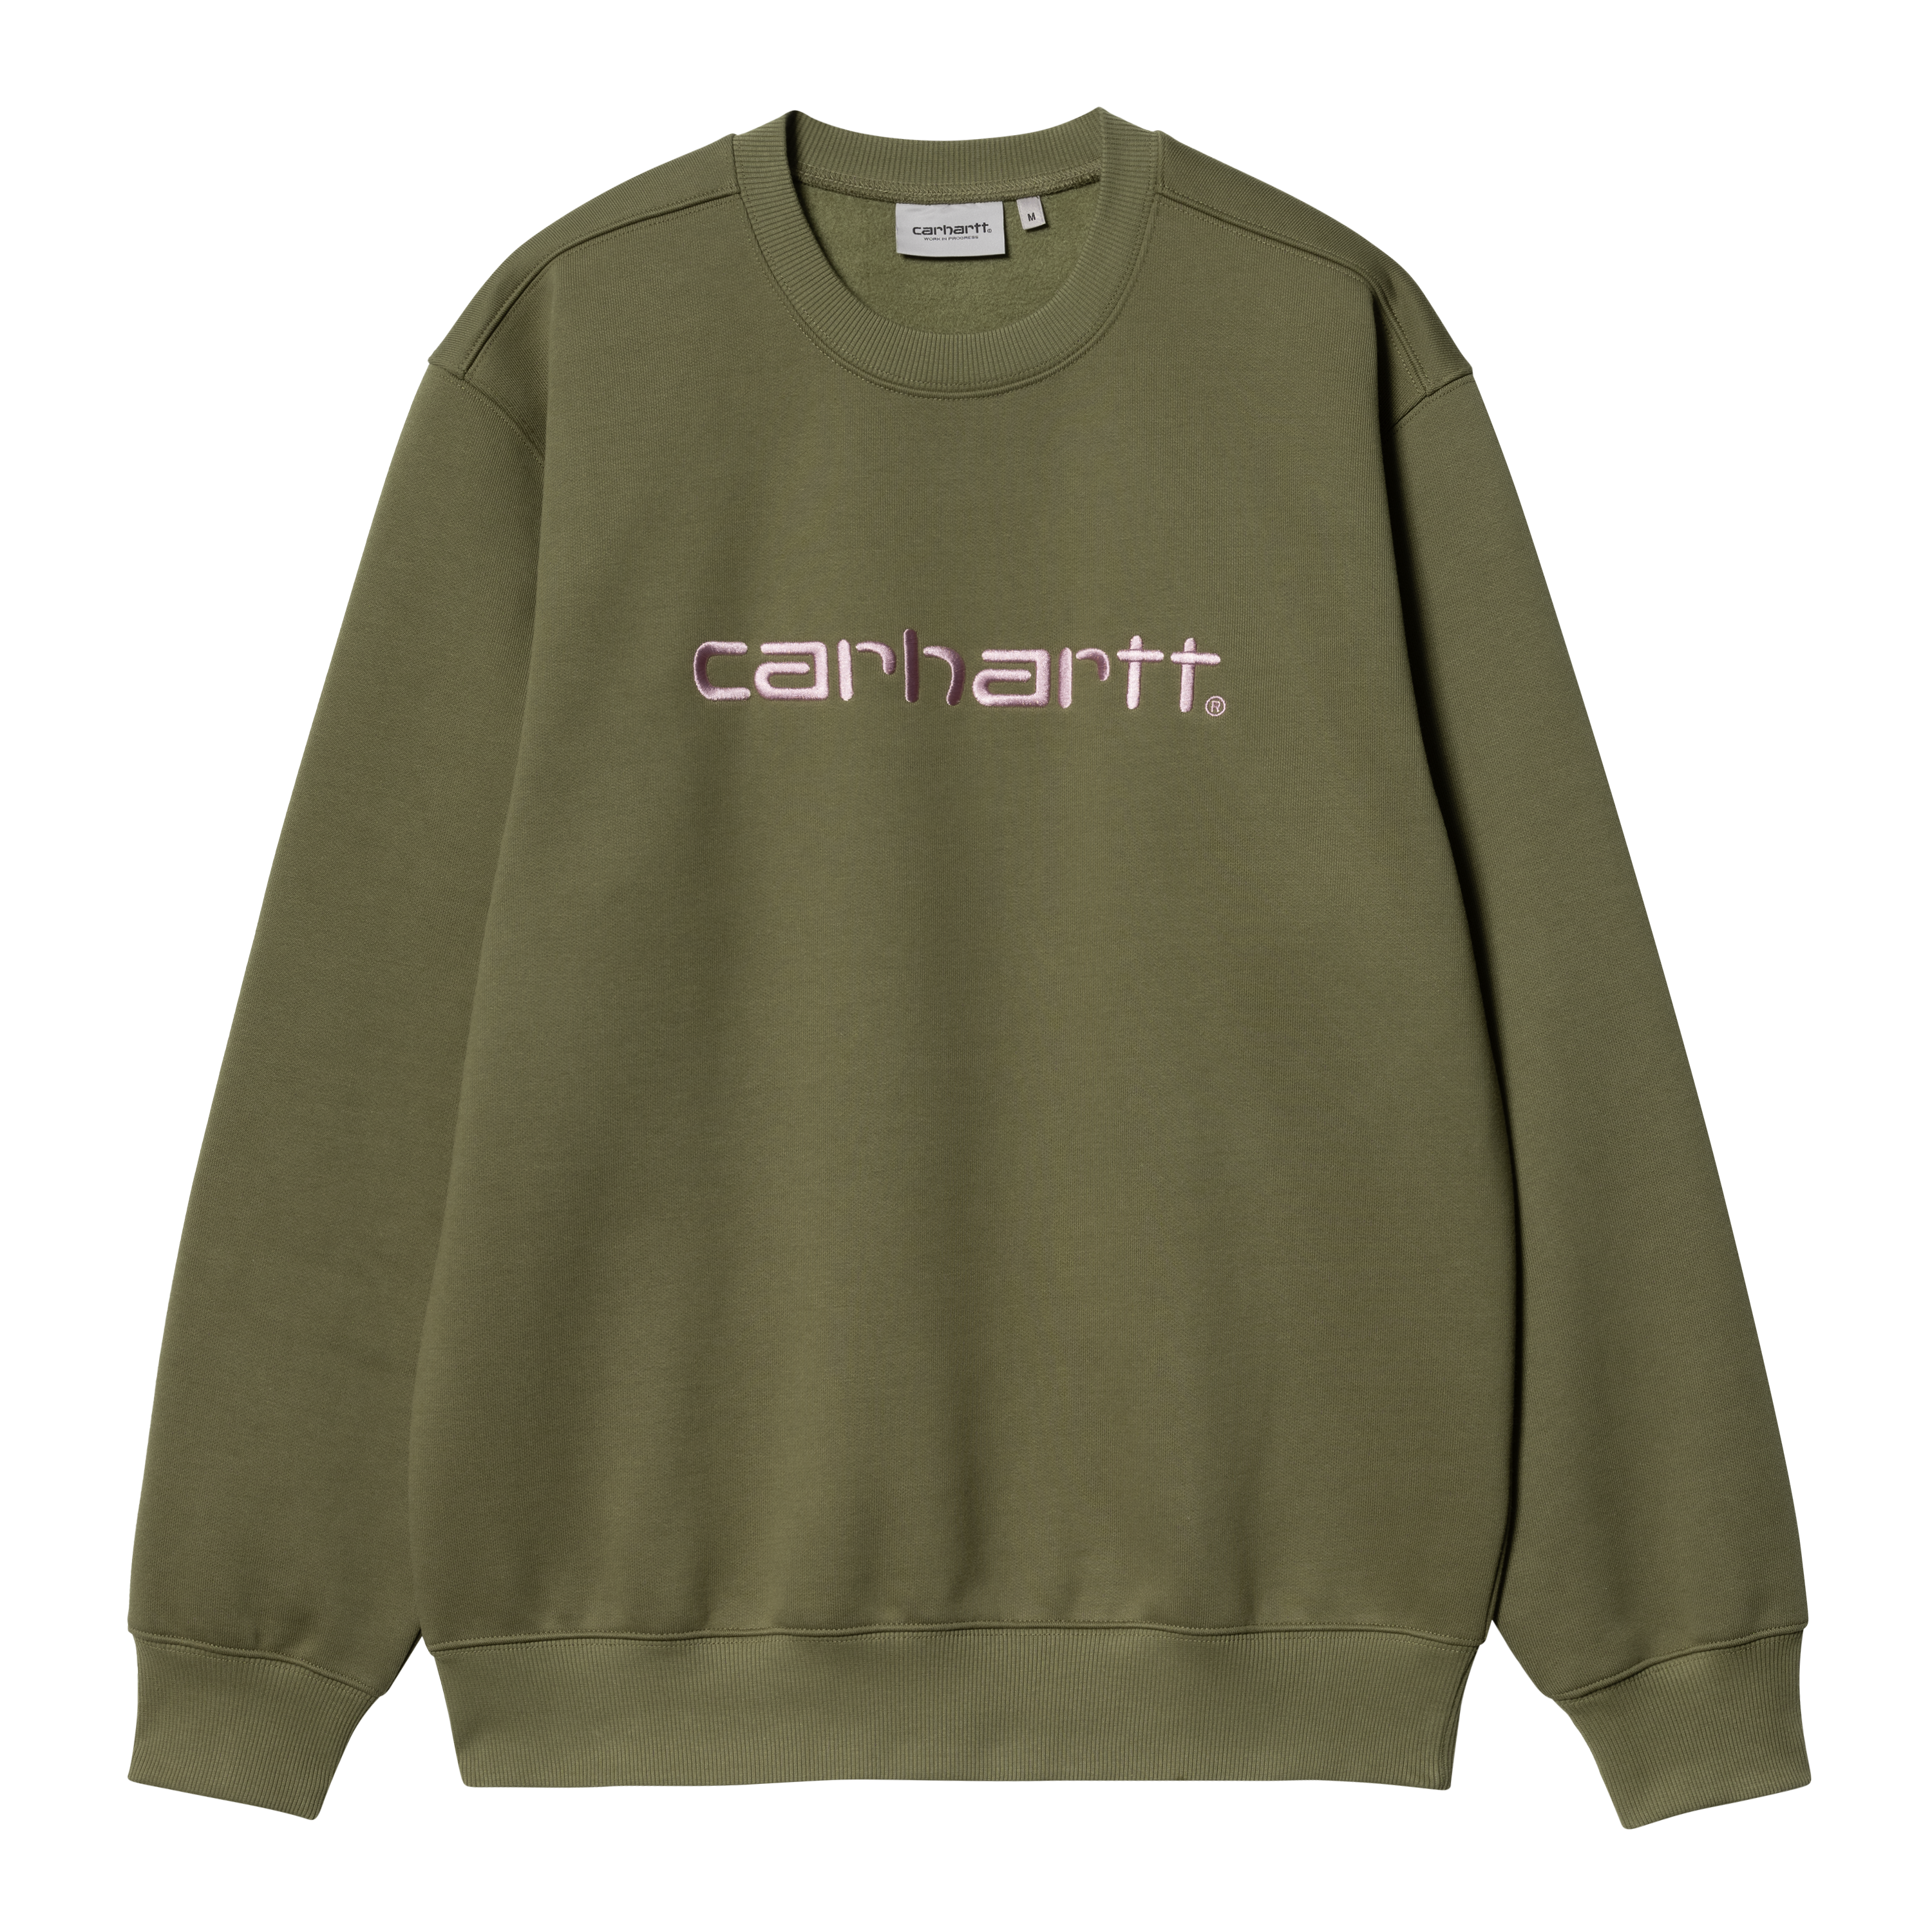 Carhartt WIP Carhartt Sweatshirt Vert